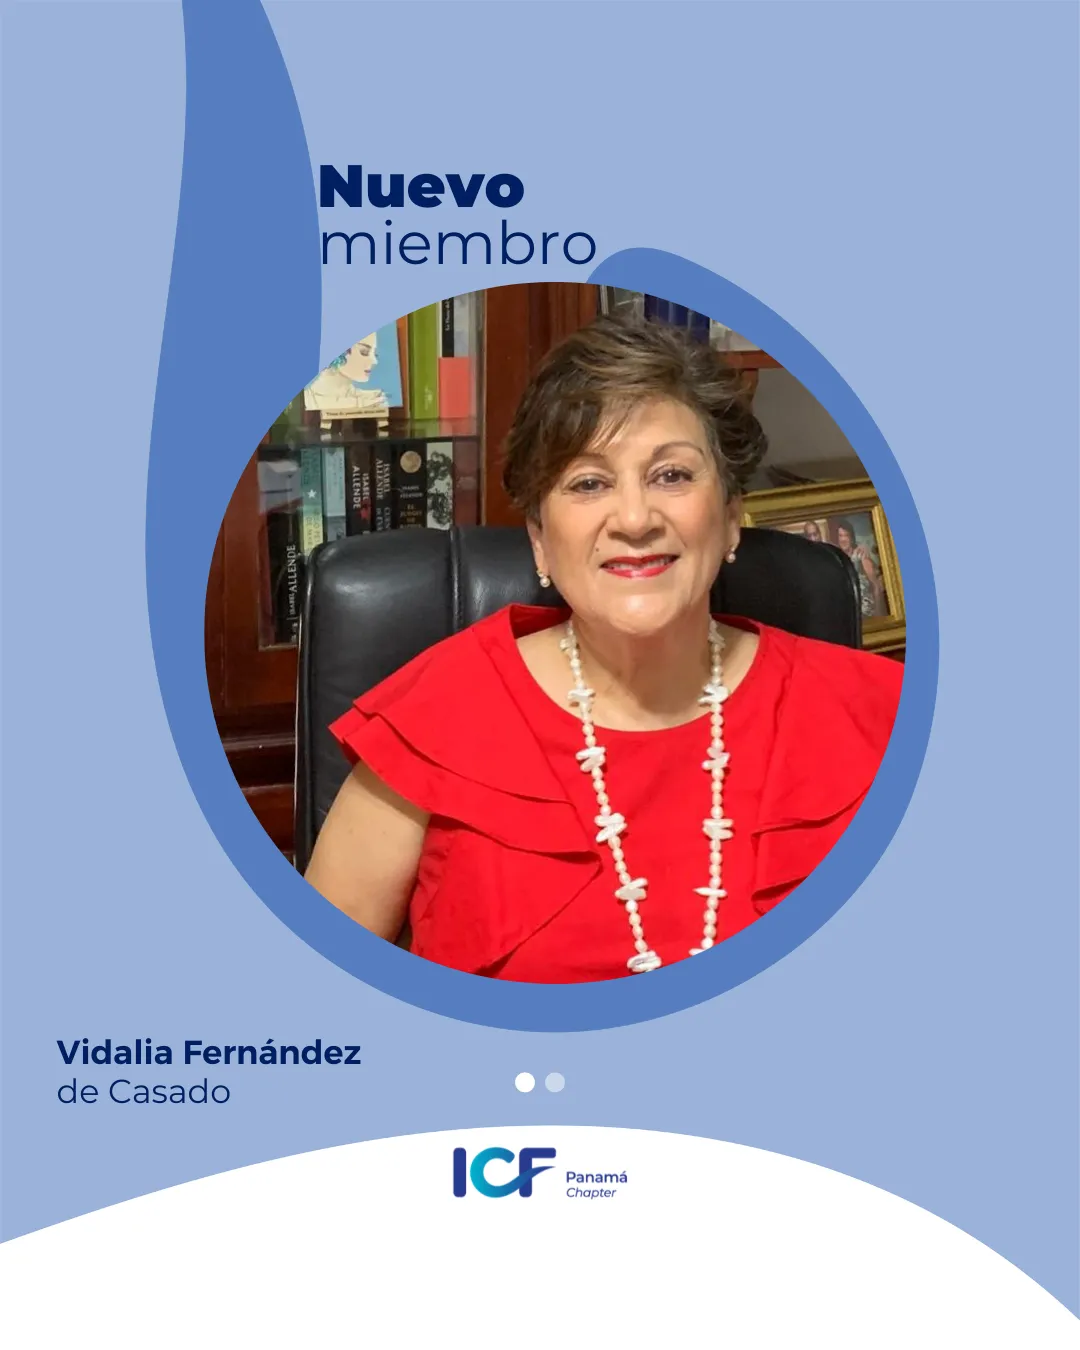 Vidalia Fernandez